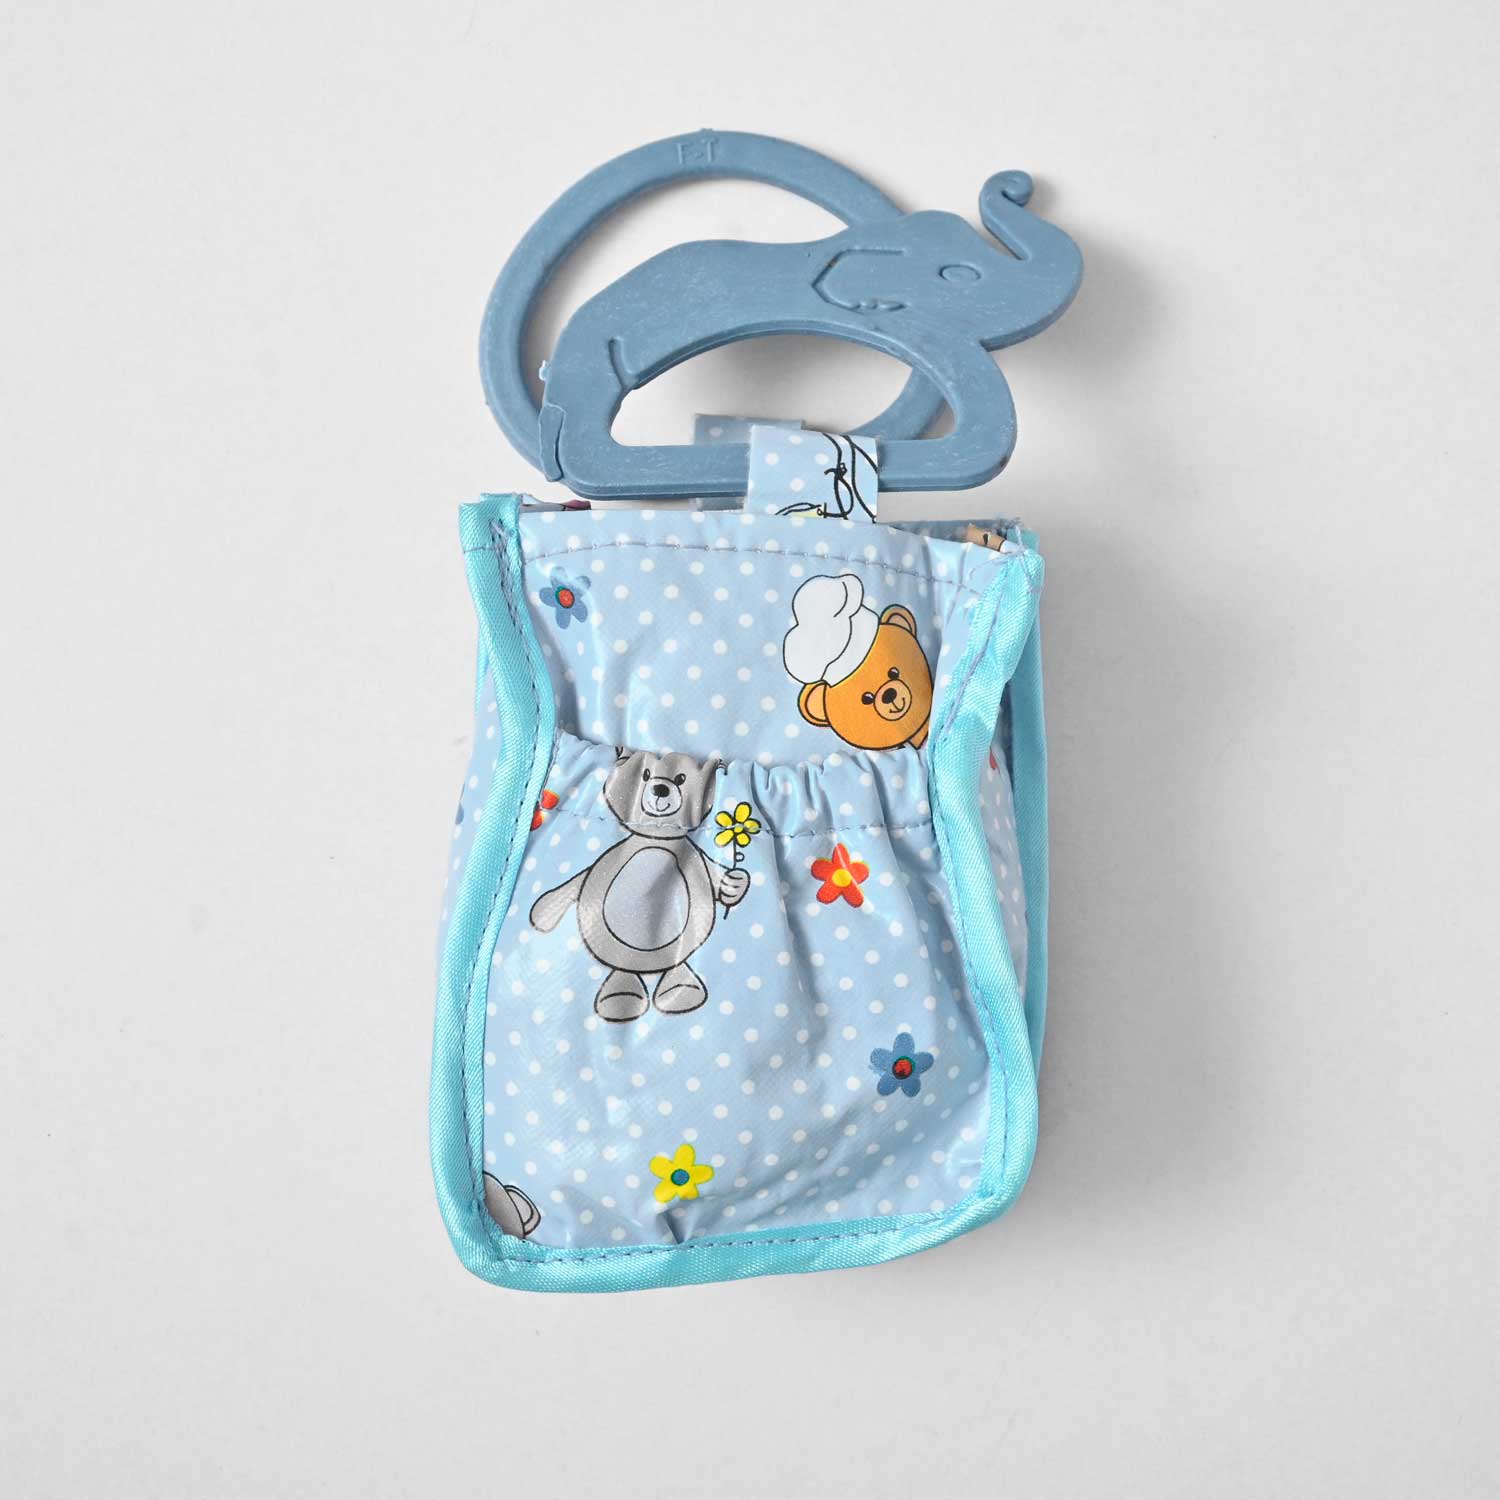 Baby Infant & Toddler's Feeding Bottle Cover Kid's Accessories RAM Sky 